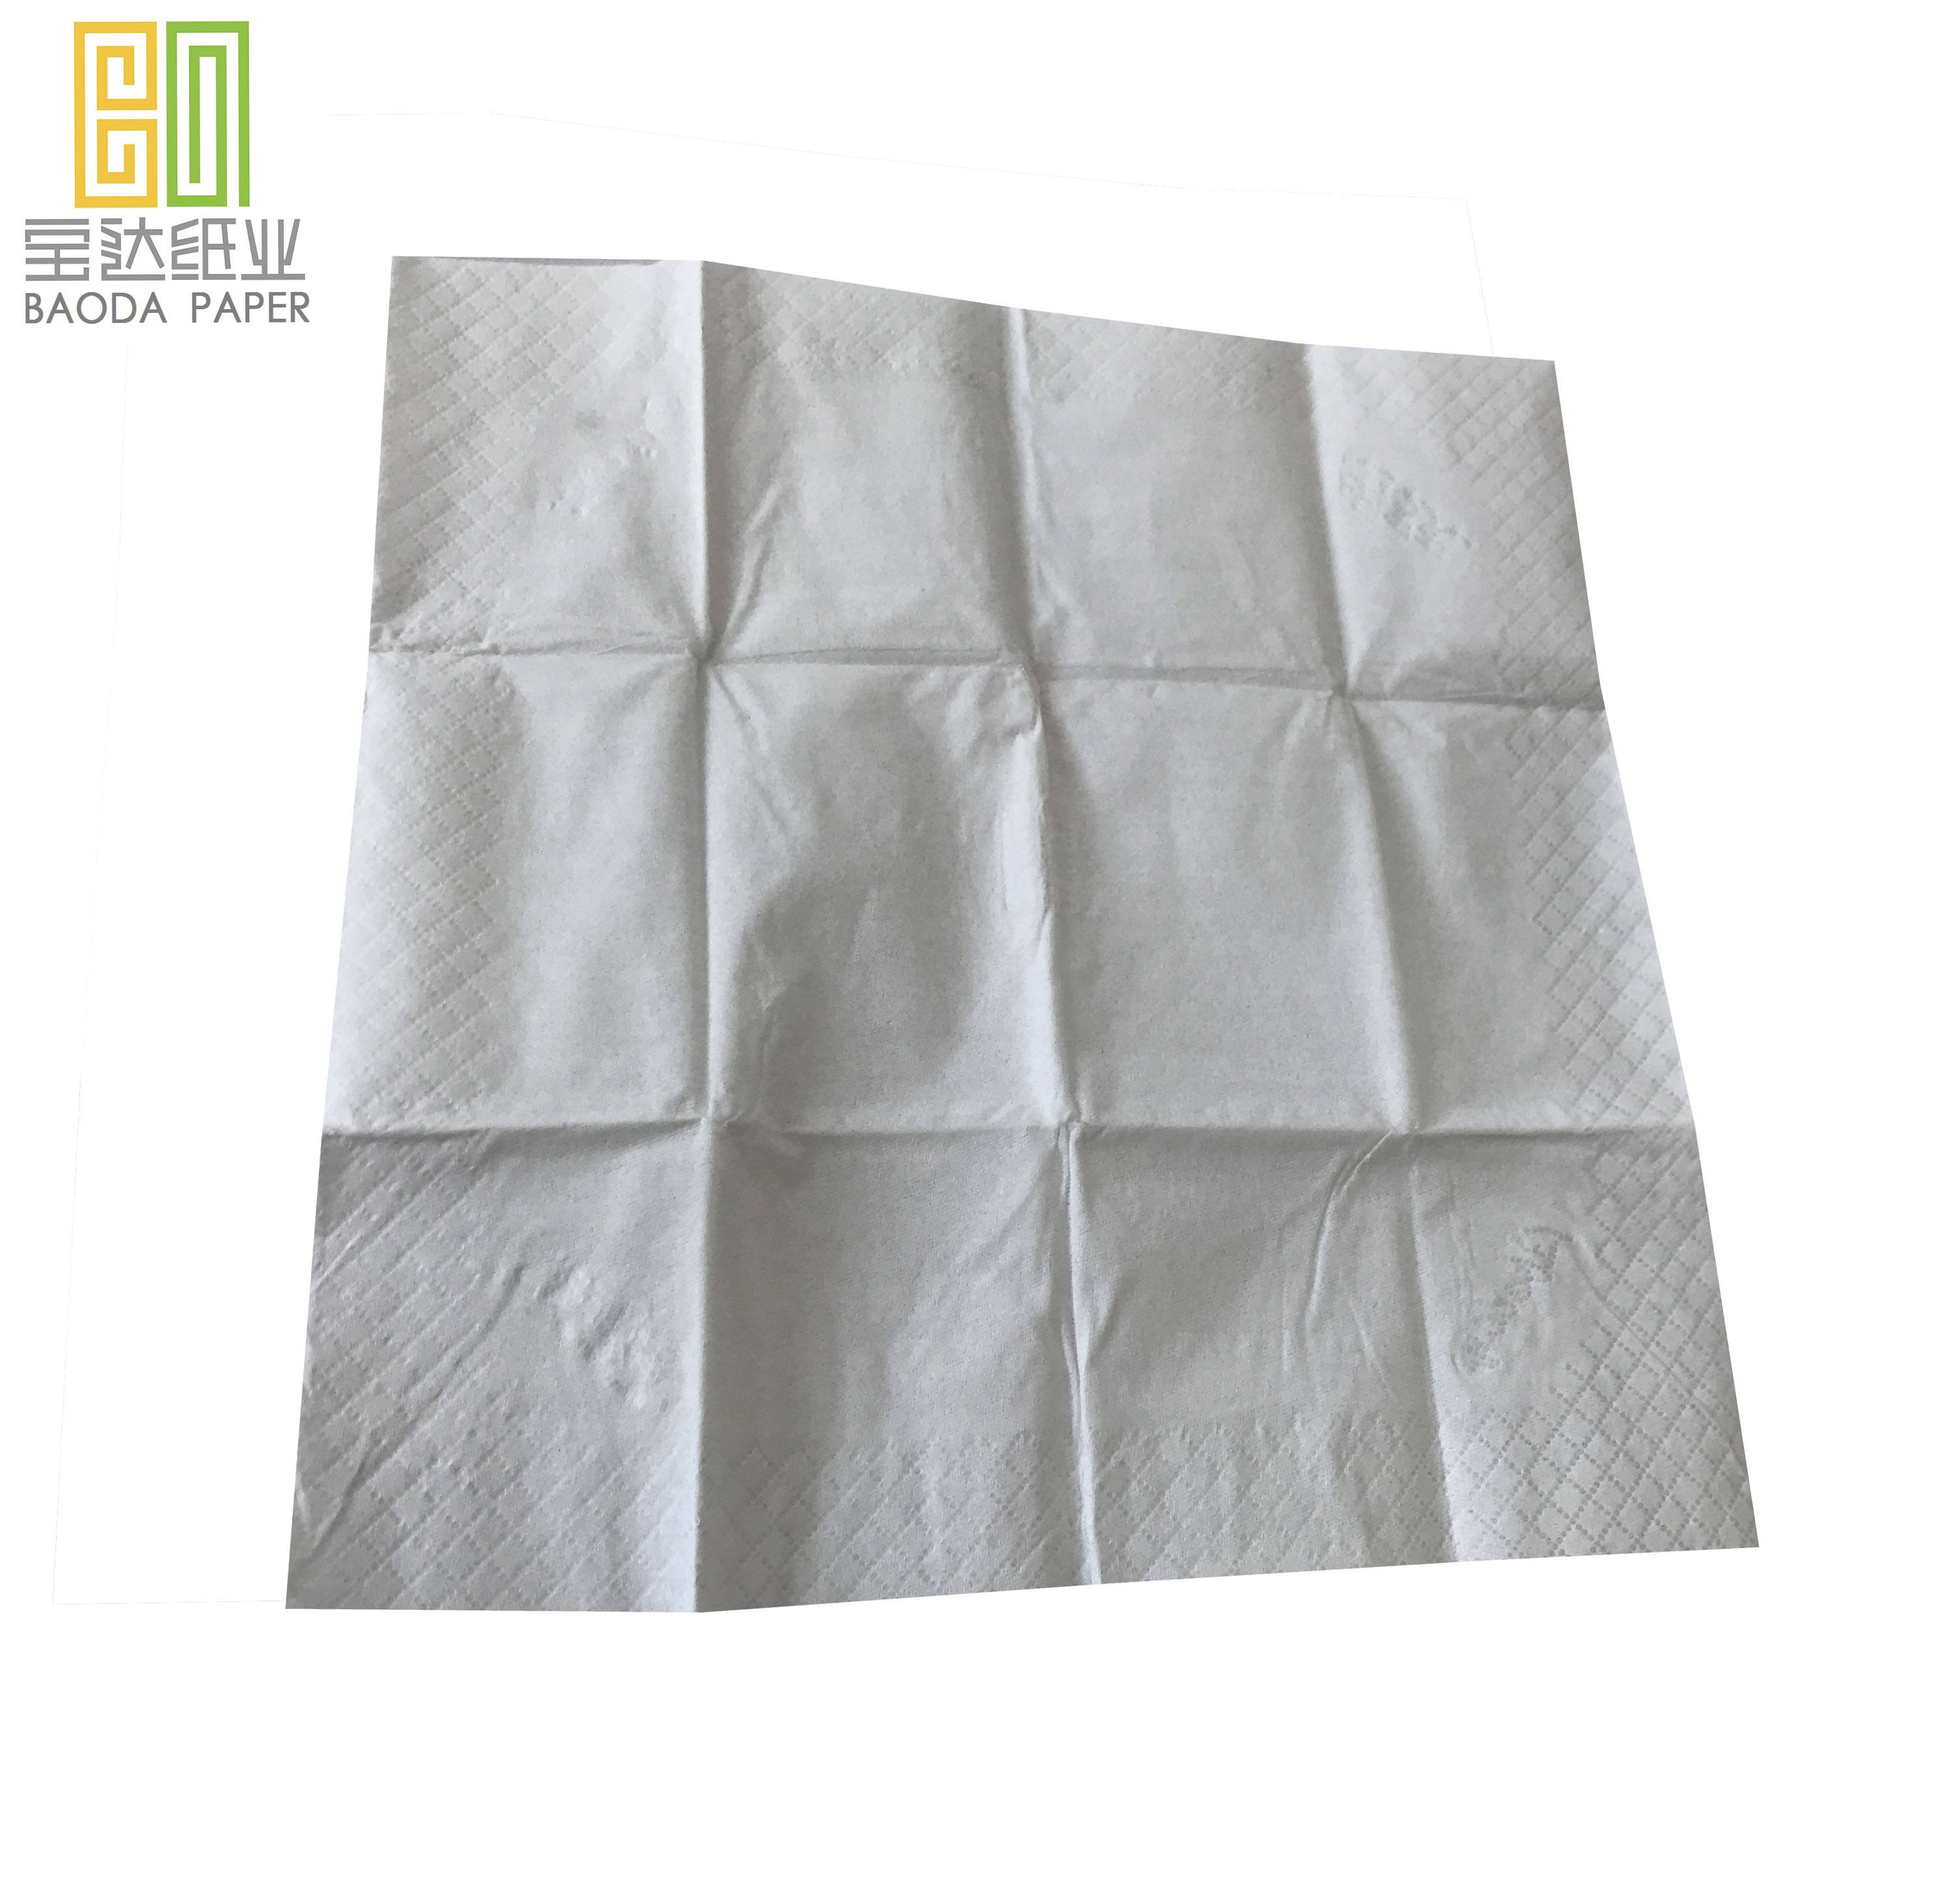 hot sale ultra Soft Standard 10 sheets Pocket Facial Tissue 100% virgin wood pulp economy pocket tissue in China 2020